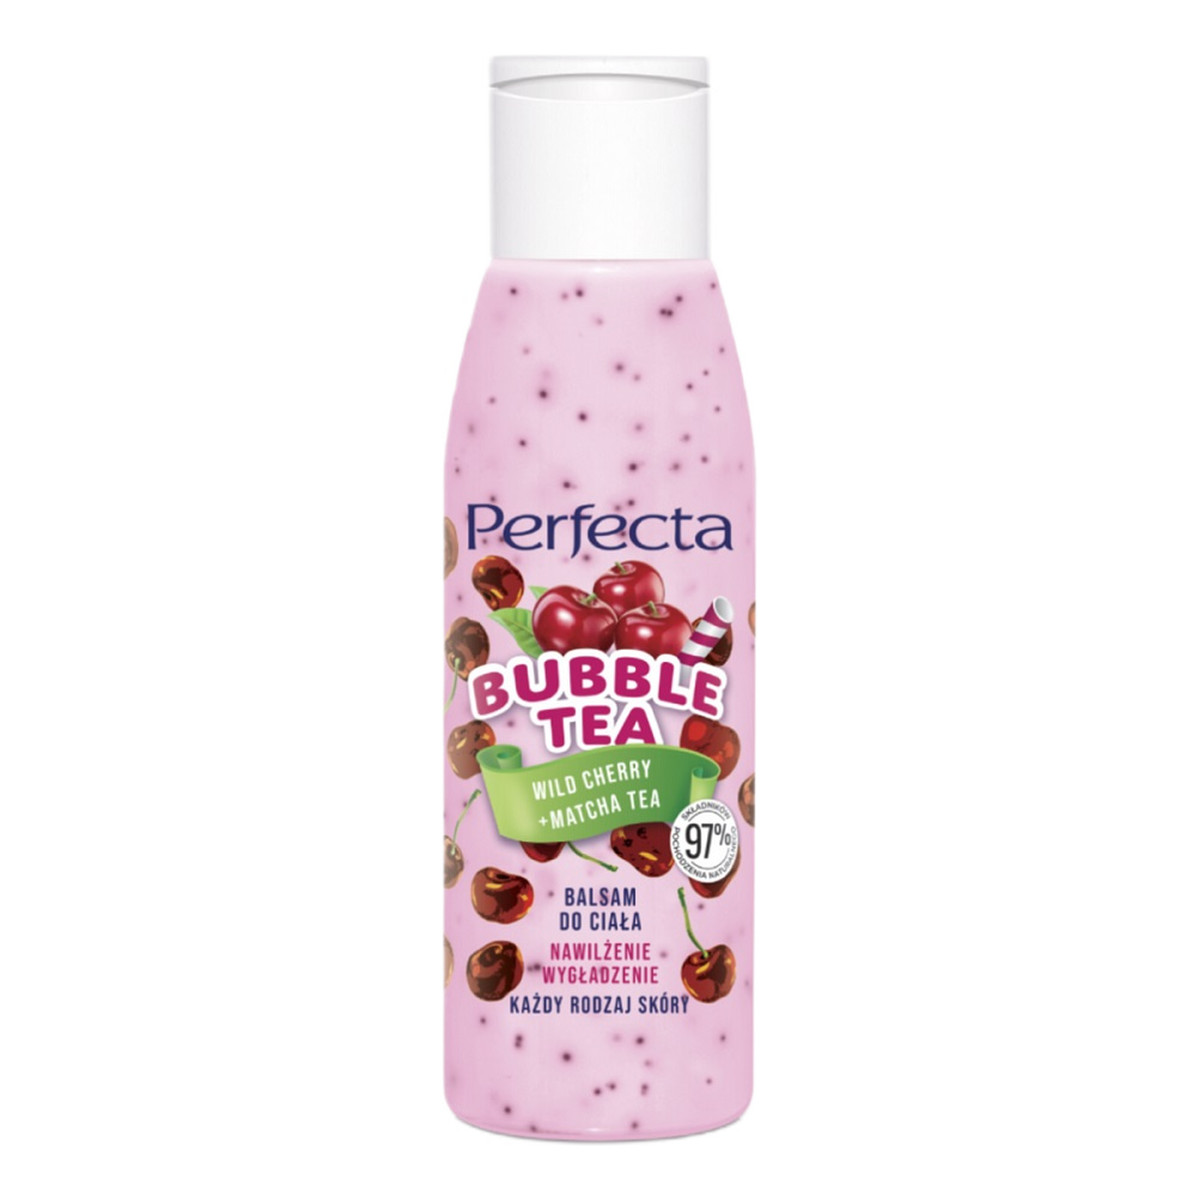 Perfecta Bubble Tea Balsam do ciała wild cherry + matcha tea 100ml